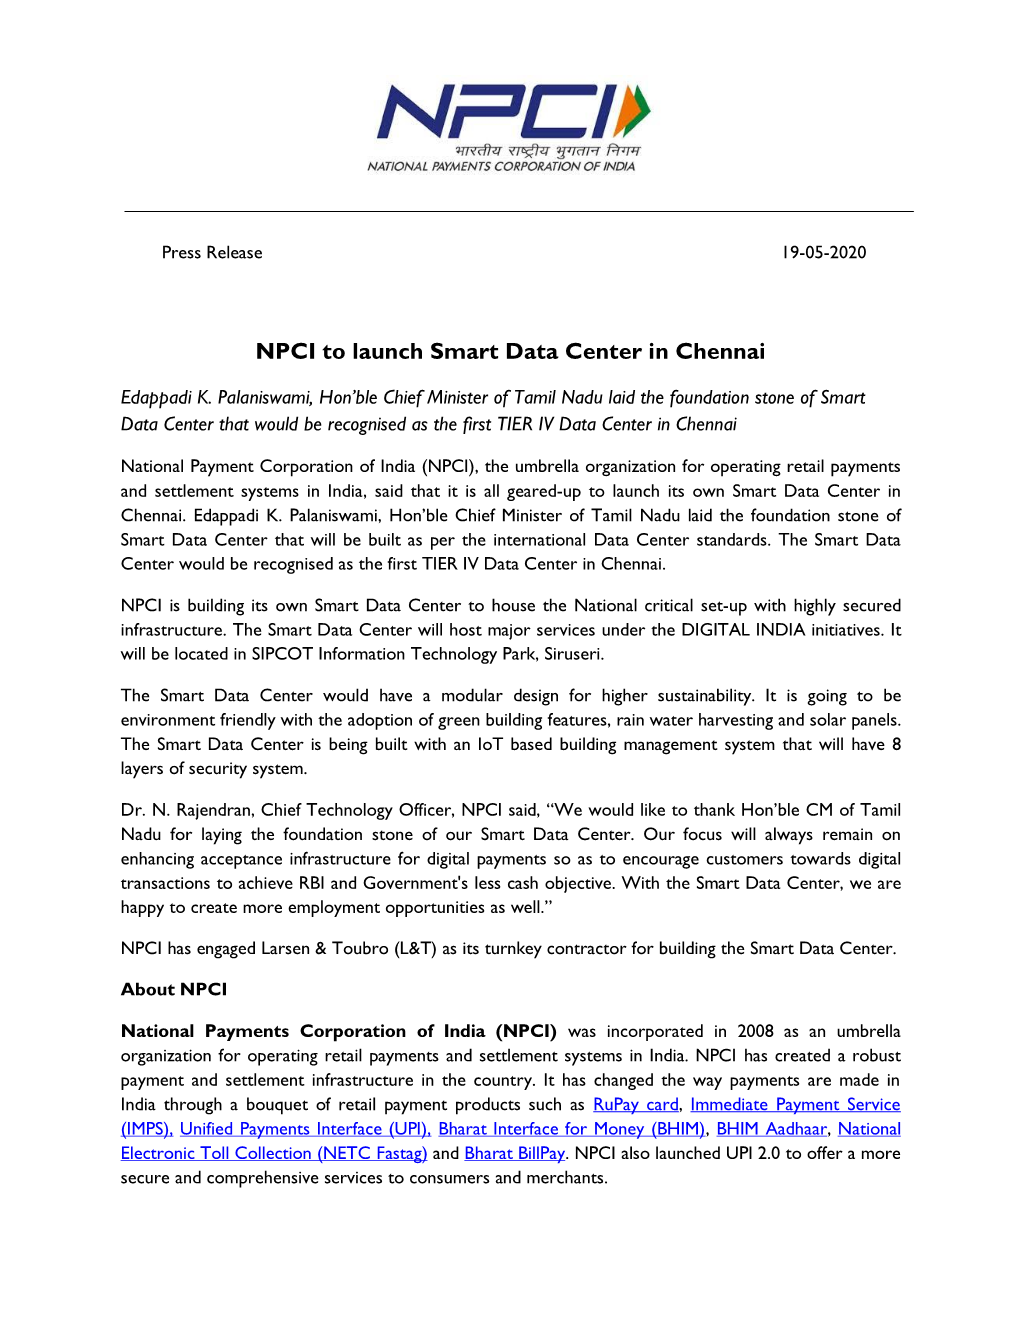 NPCI to Launch Smart Data Center in Chennai